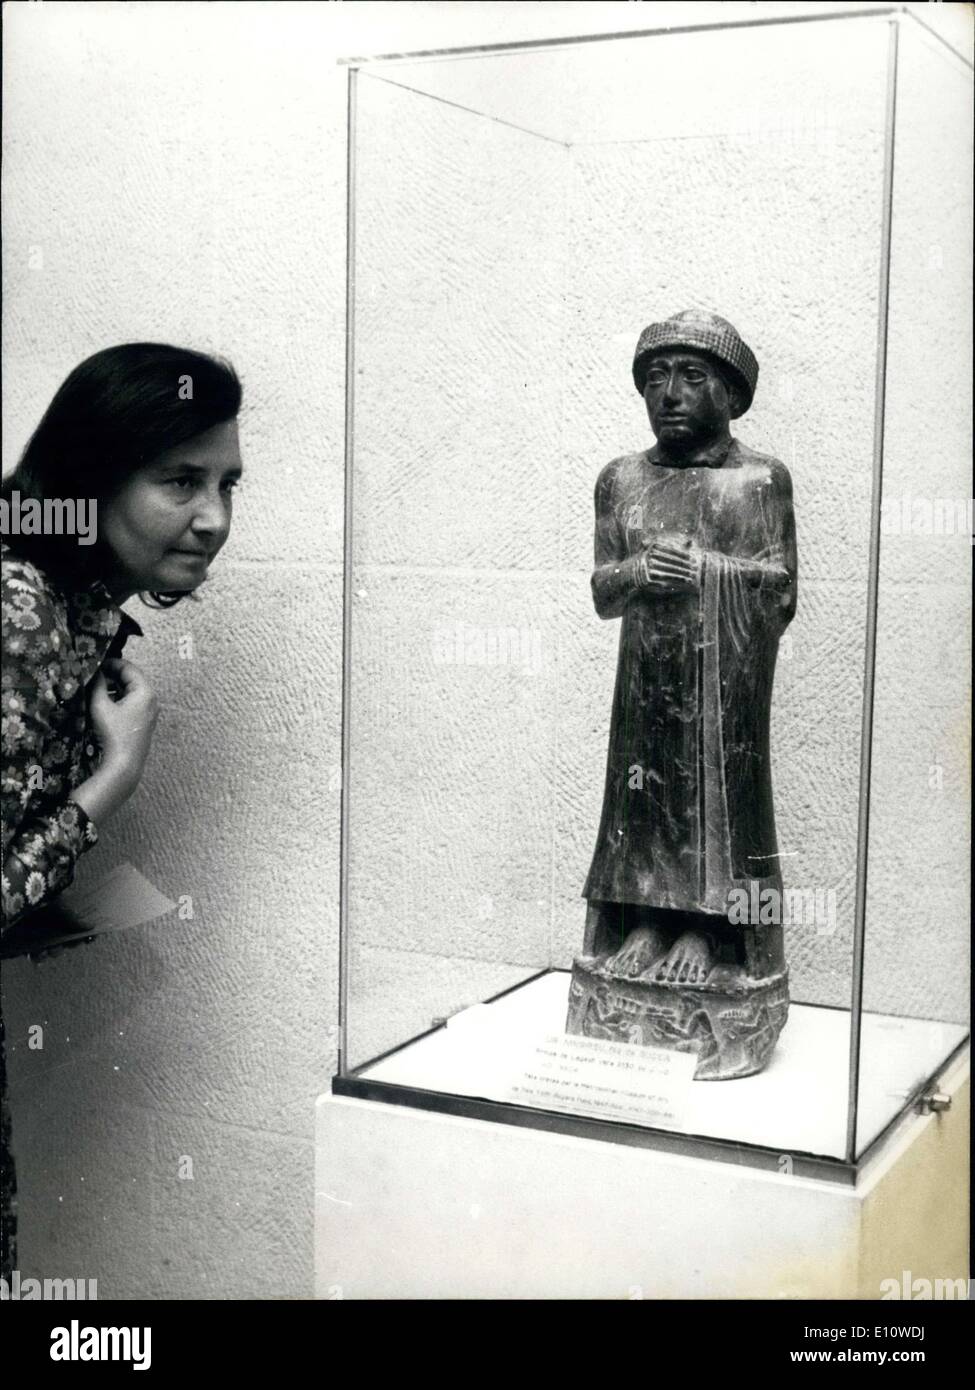 Giugno 21, 1974 - Metropolitan Museum of Art di Parigi, Statua del Principe Lagash APRESS.co Foto Stock